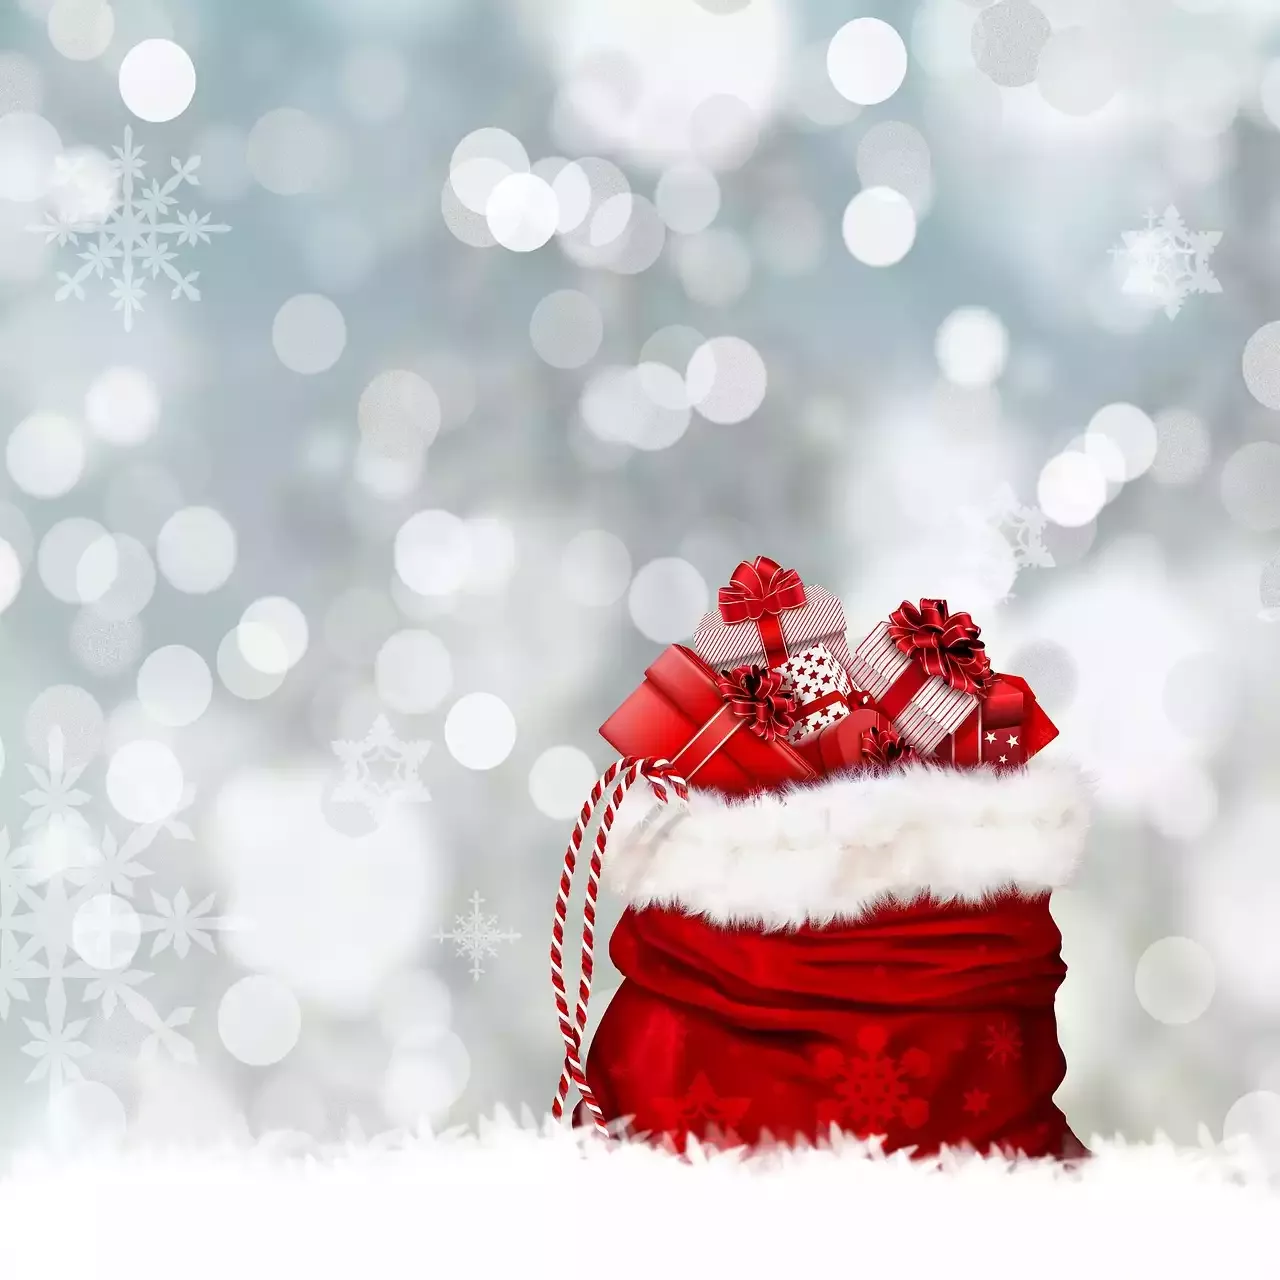 How to Organize a Secret Santa Gift Exchange